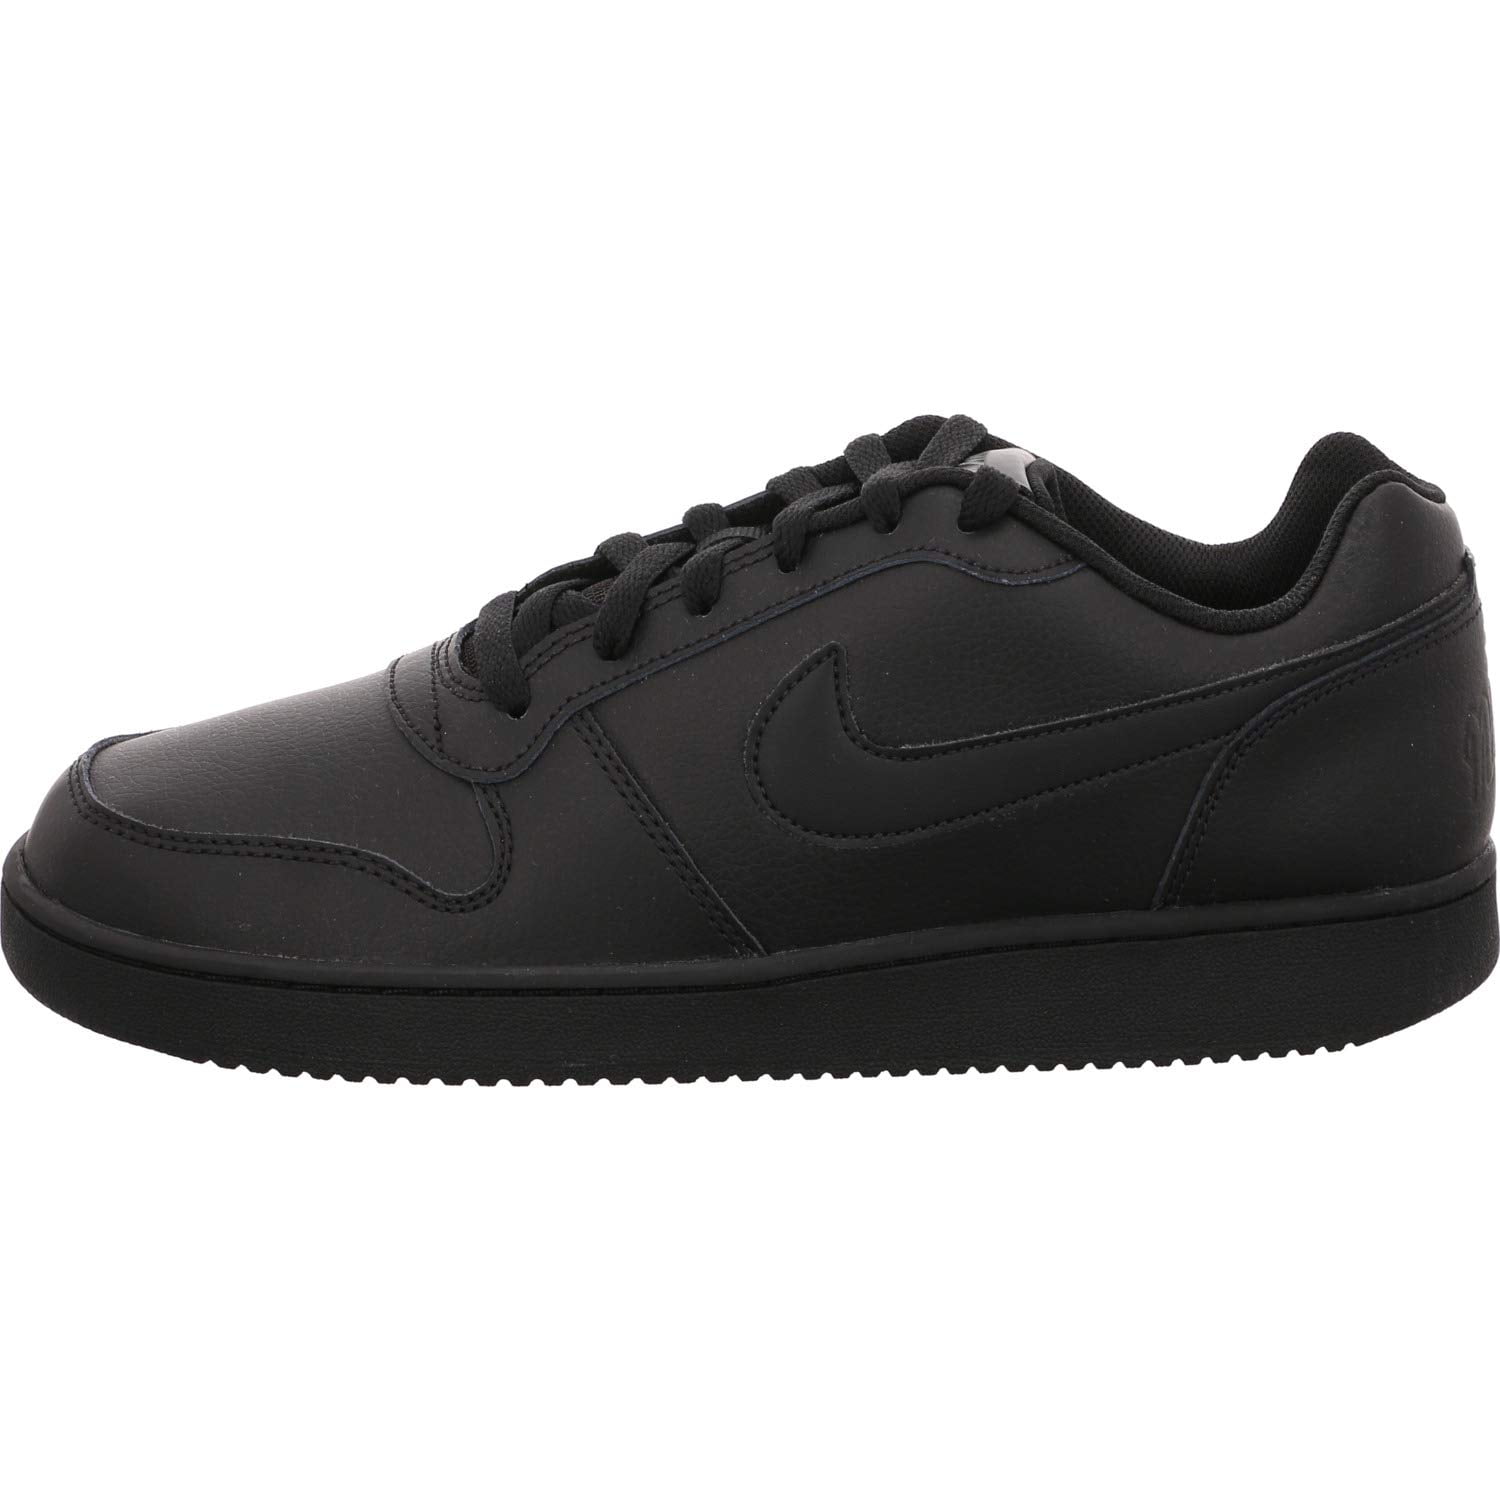 Delgado apenas Post impresionismo NIKE Men's Nike Ebernon Low Athletic Shoe, black/black, 10 Regular US -  Walmart.com